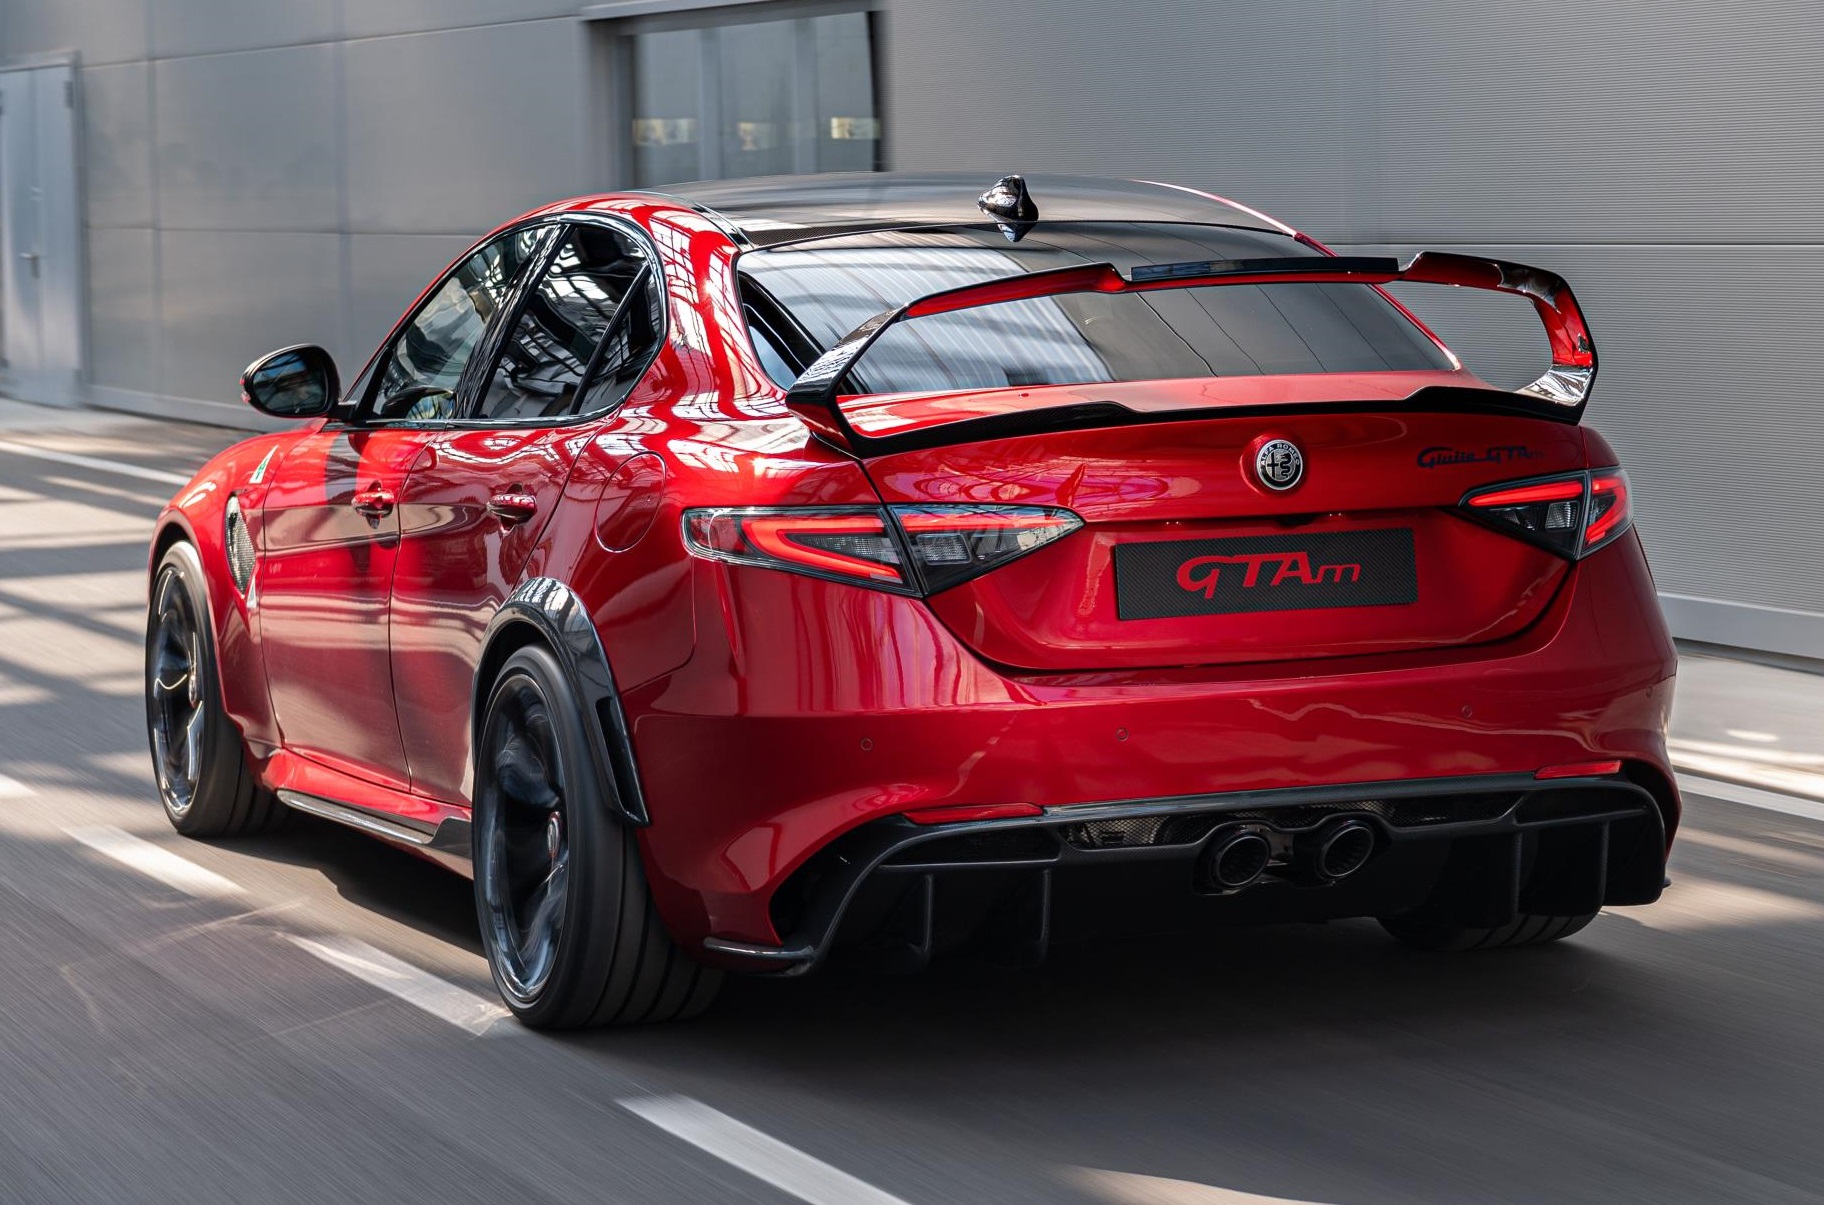 2020 Alfa Romeo GTA Revealed, 500 Units Only - GTspirit